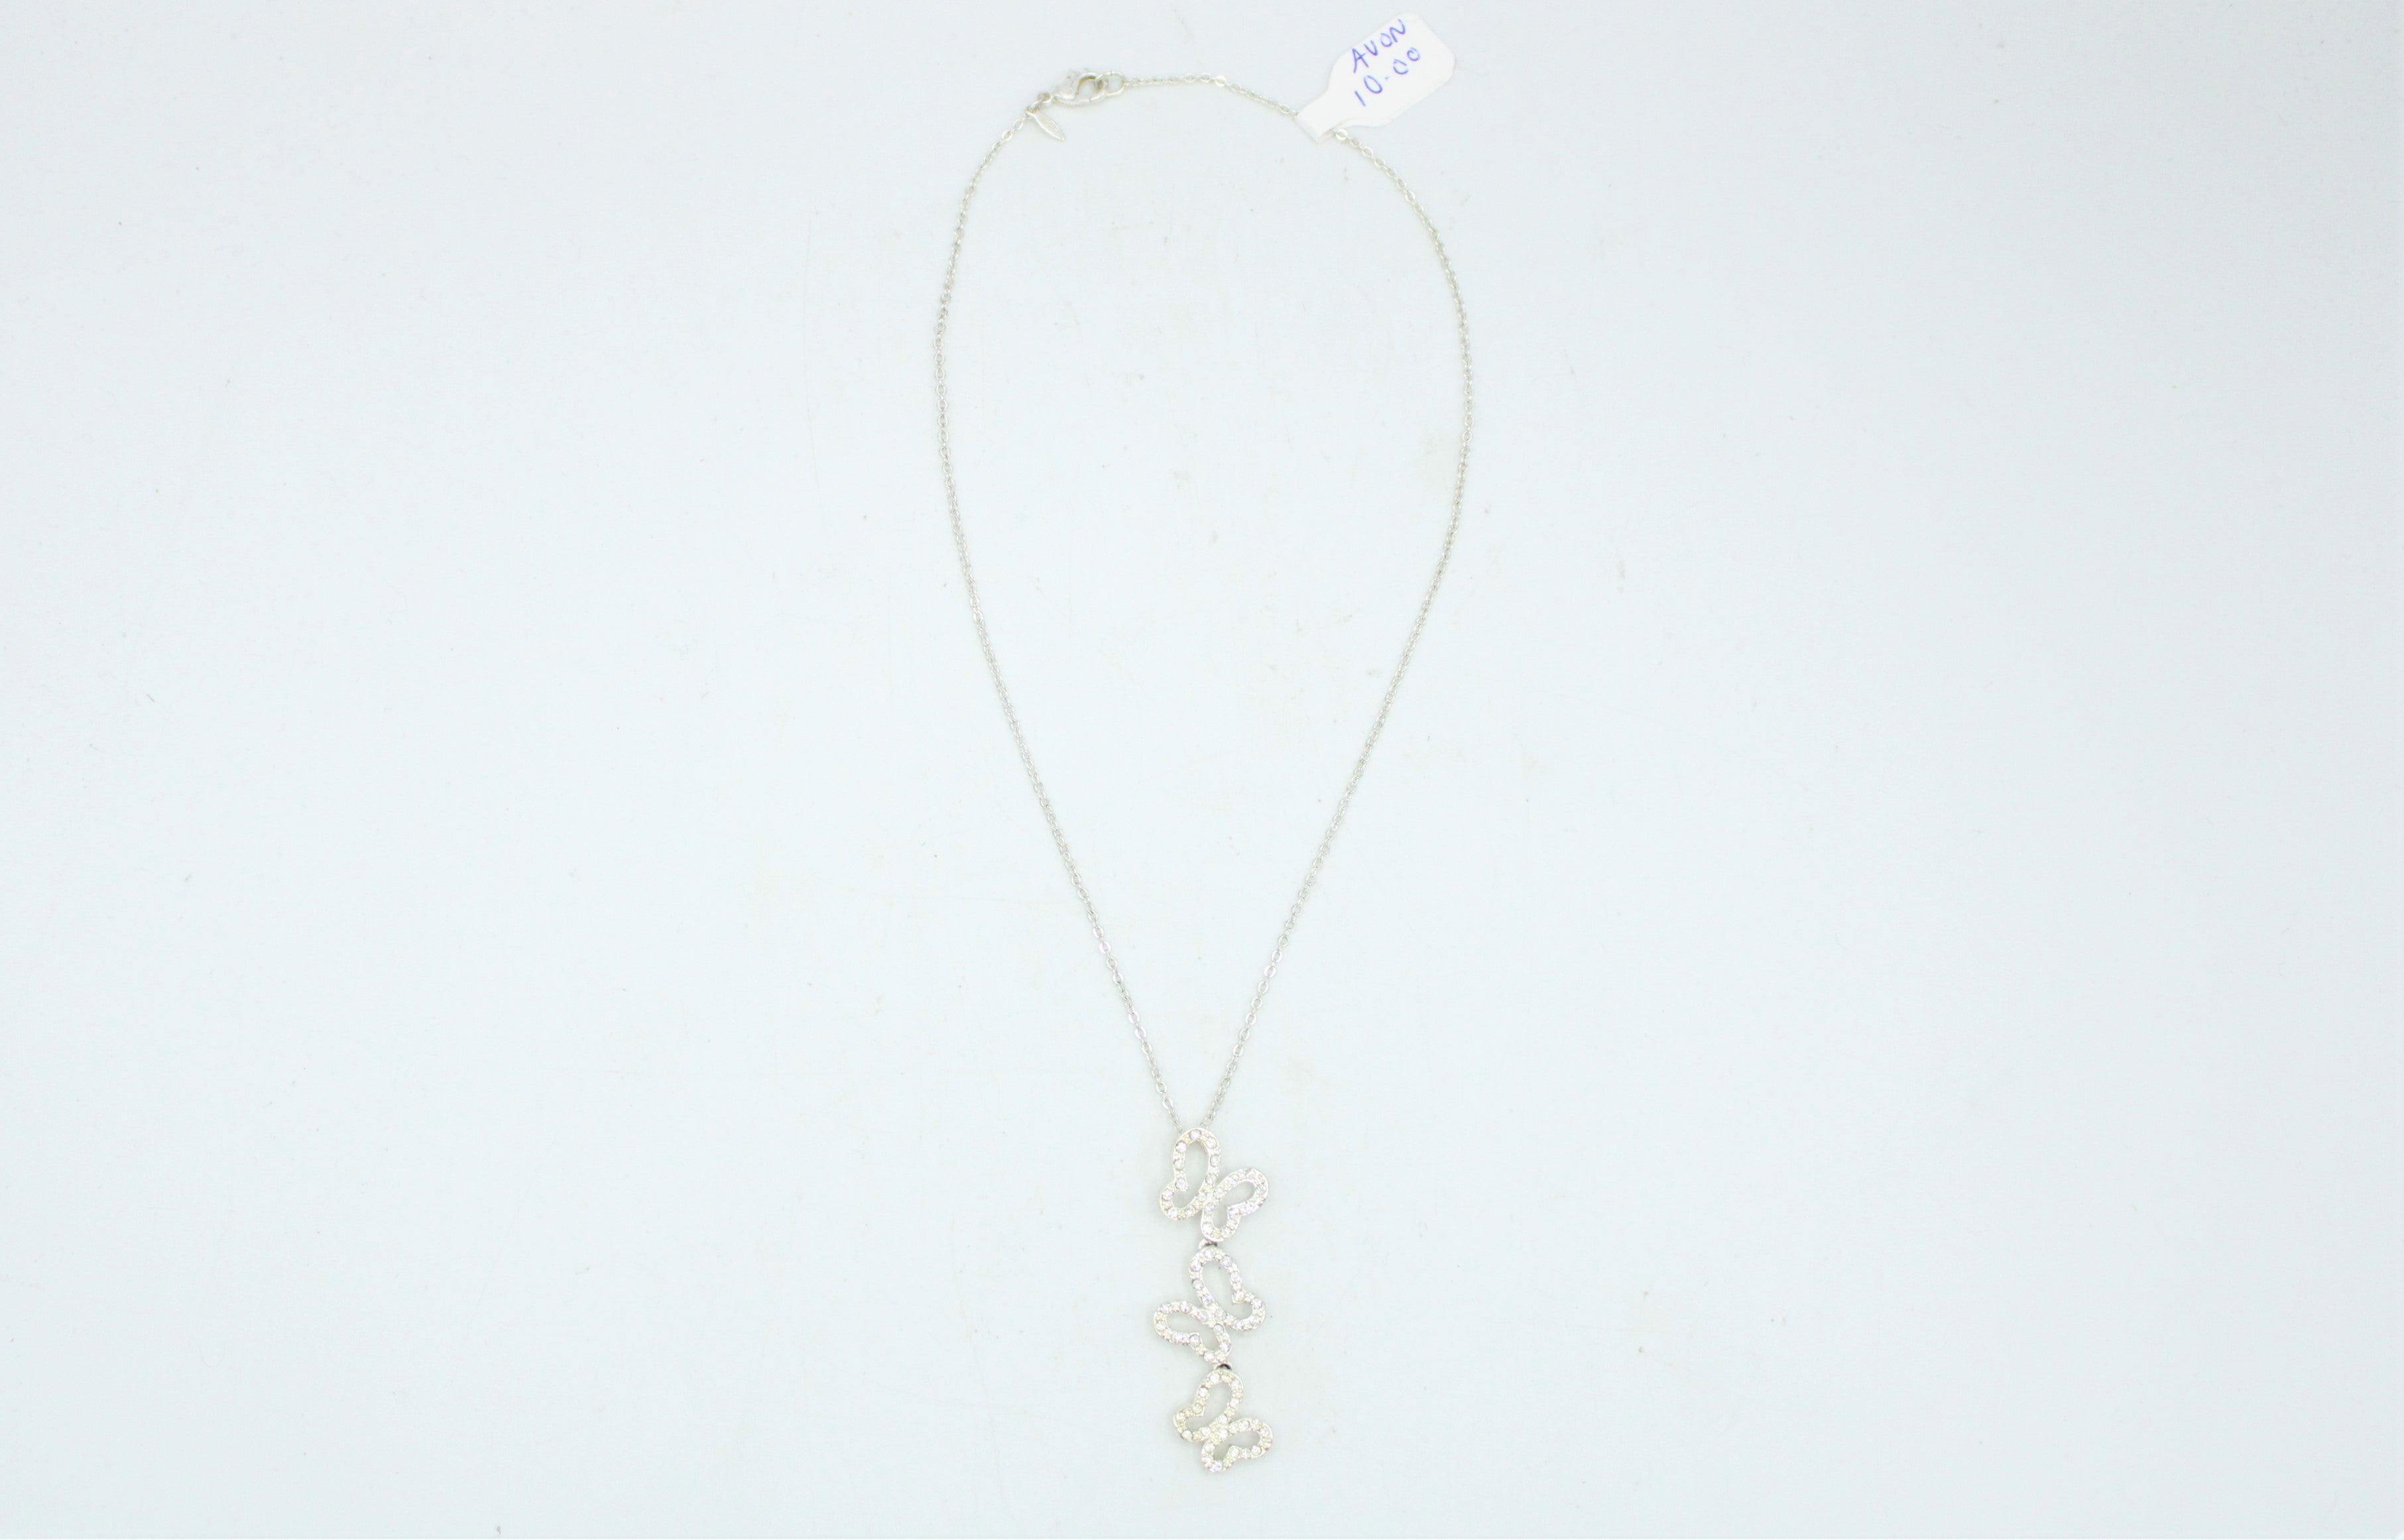 Avon Butterfly Necklace